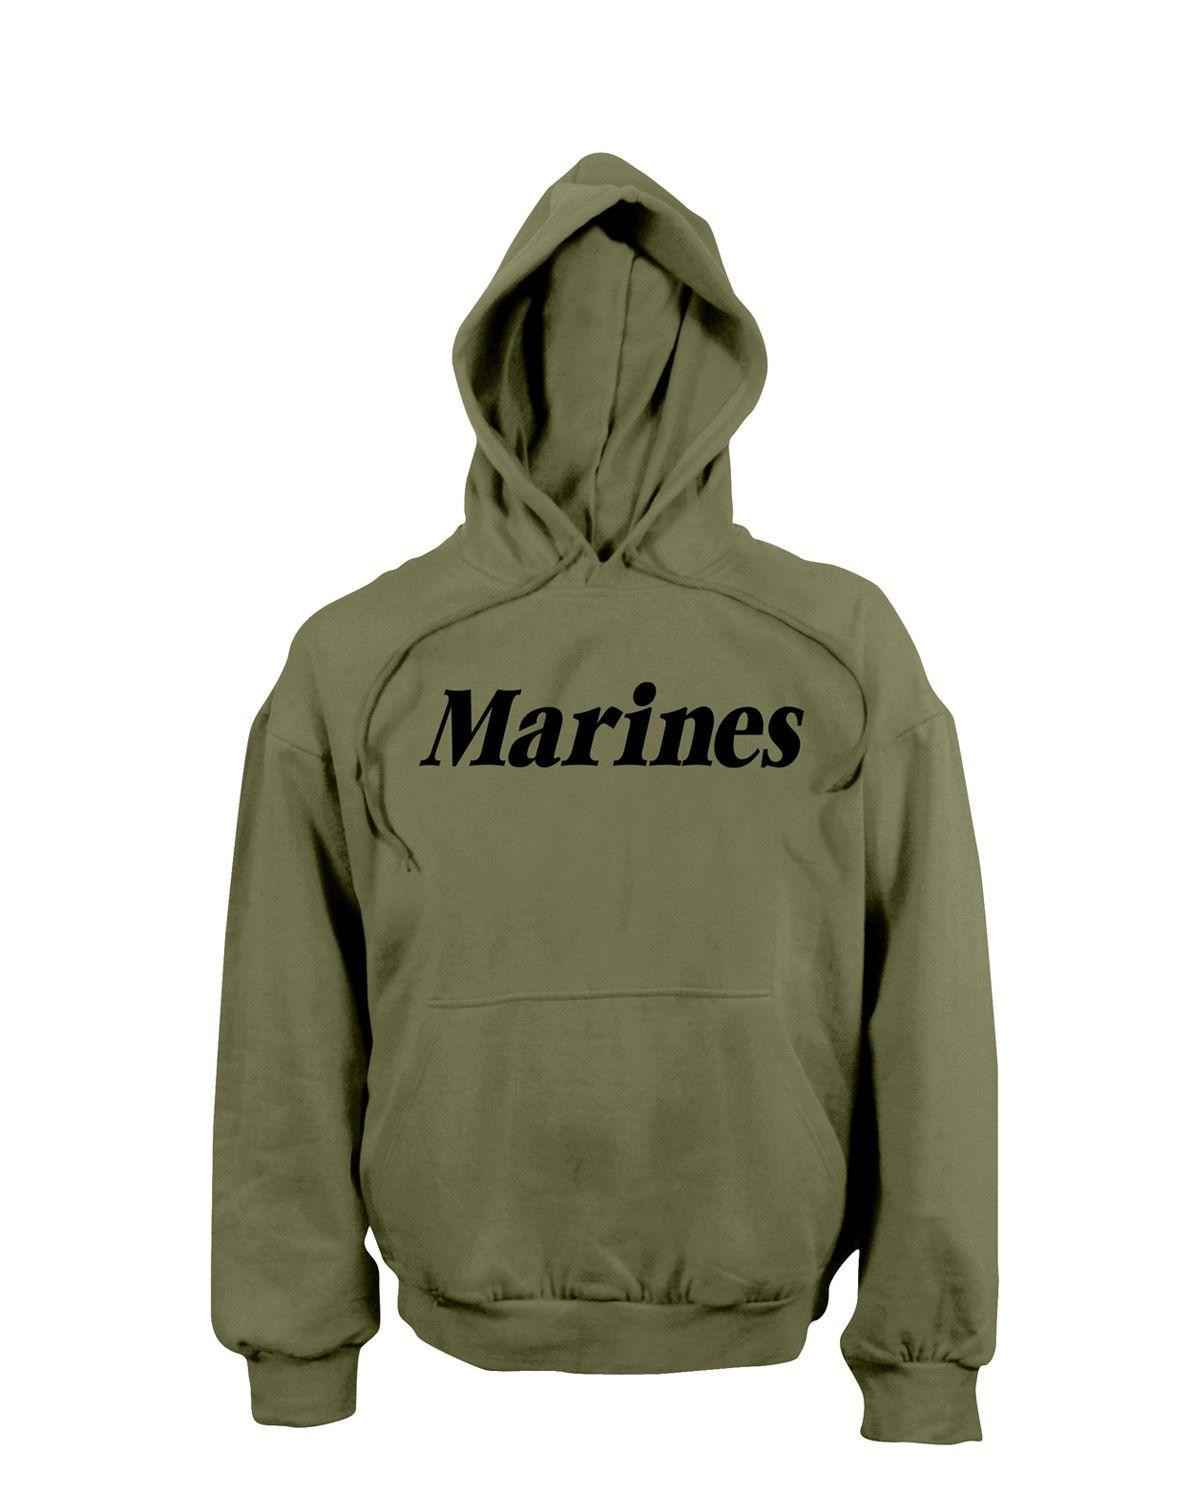 #3 - Rothco Trænings Sweatshirt (Oliven m. Marines, S)